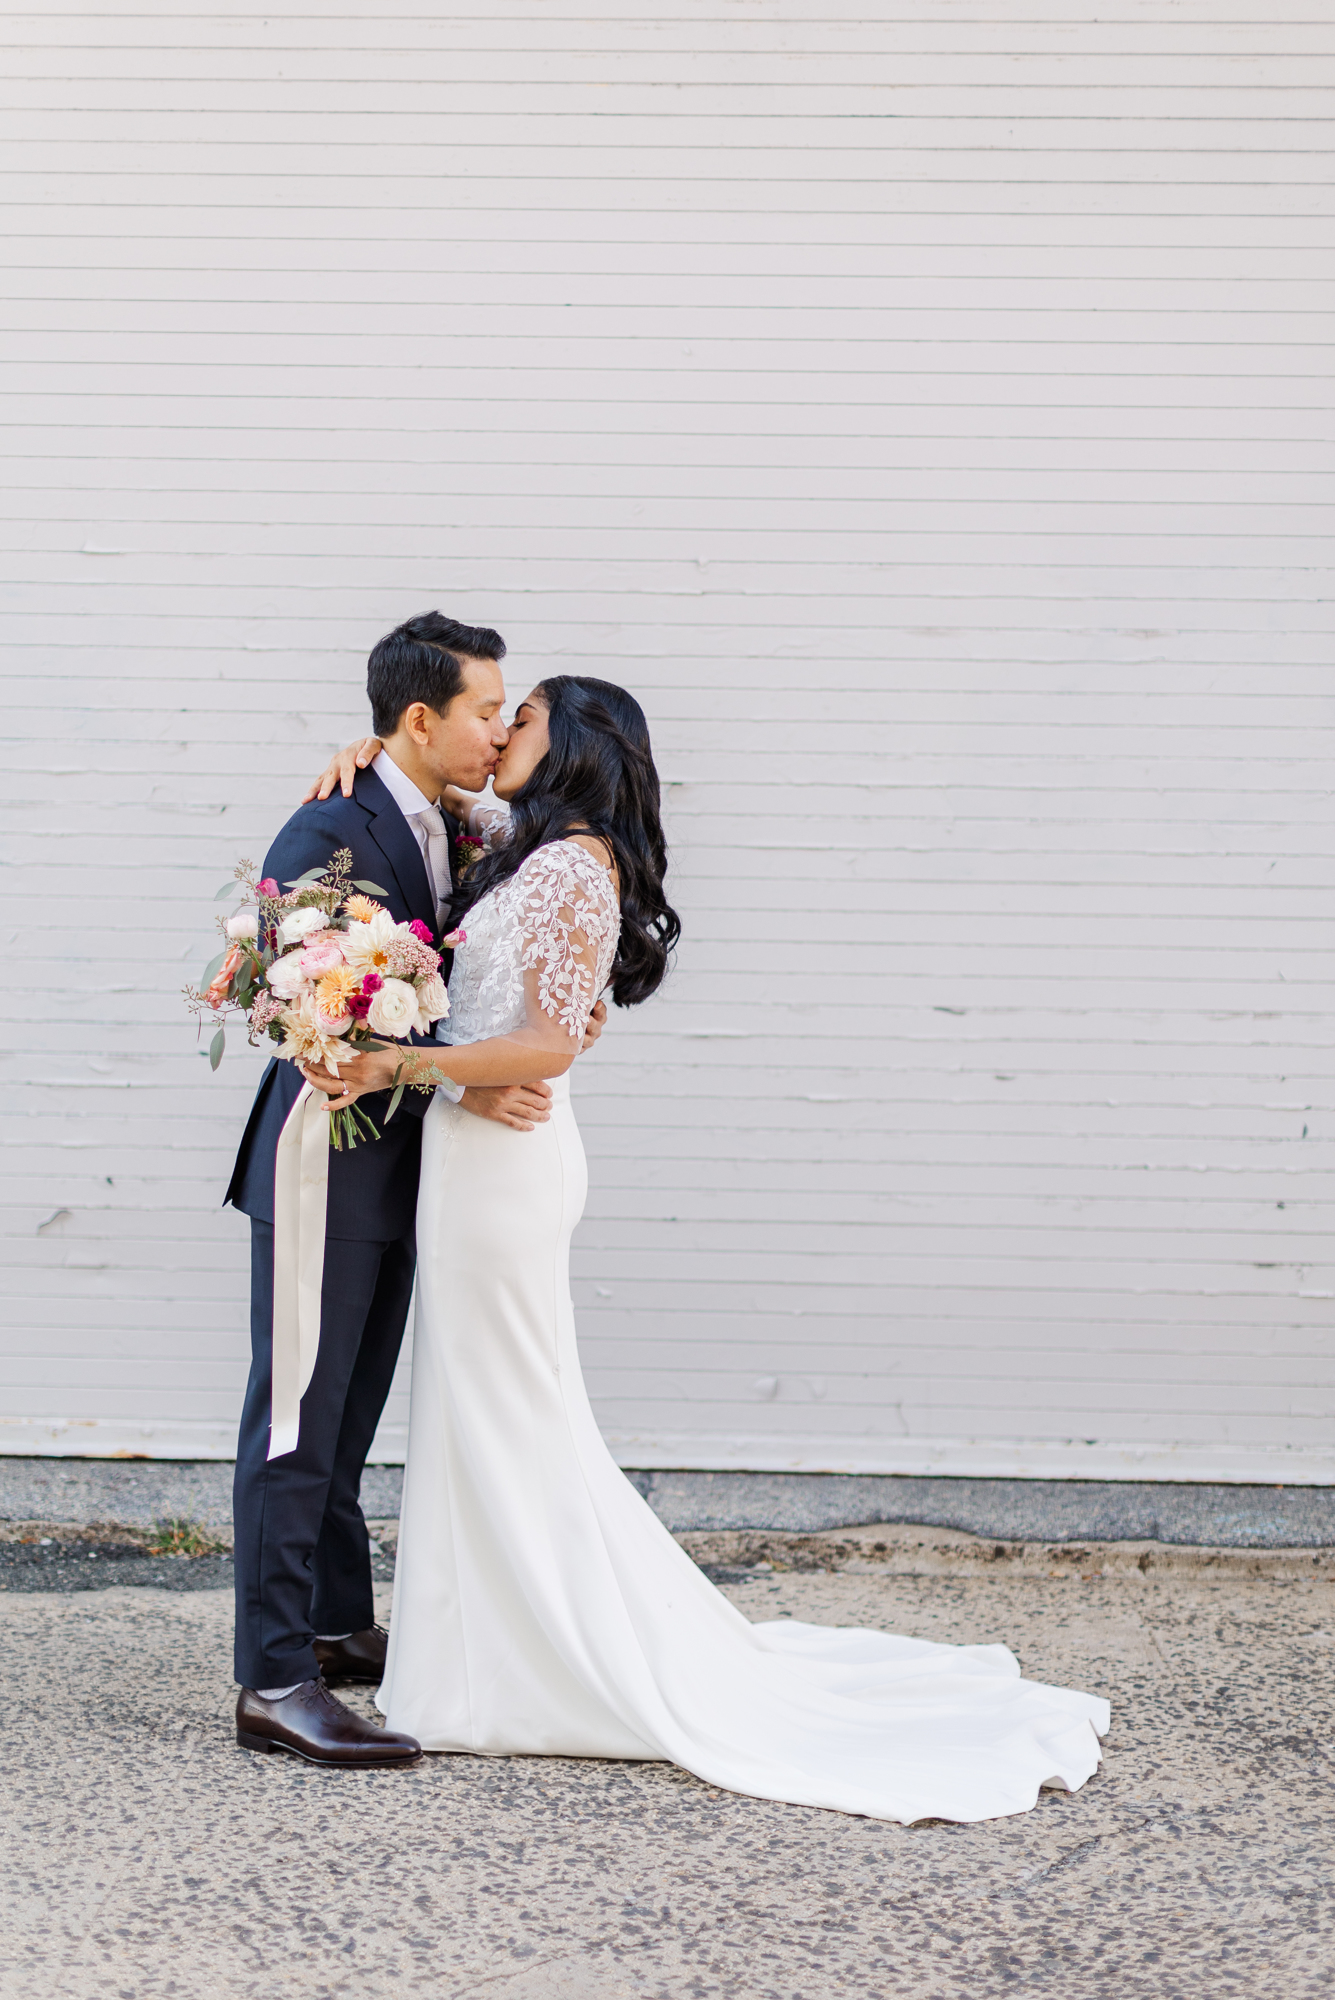 Eye-catching Fall New York Wedding Photos at Brooklyn Winery